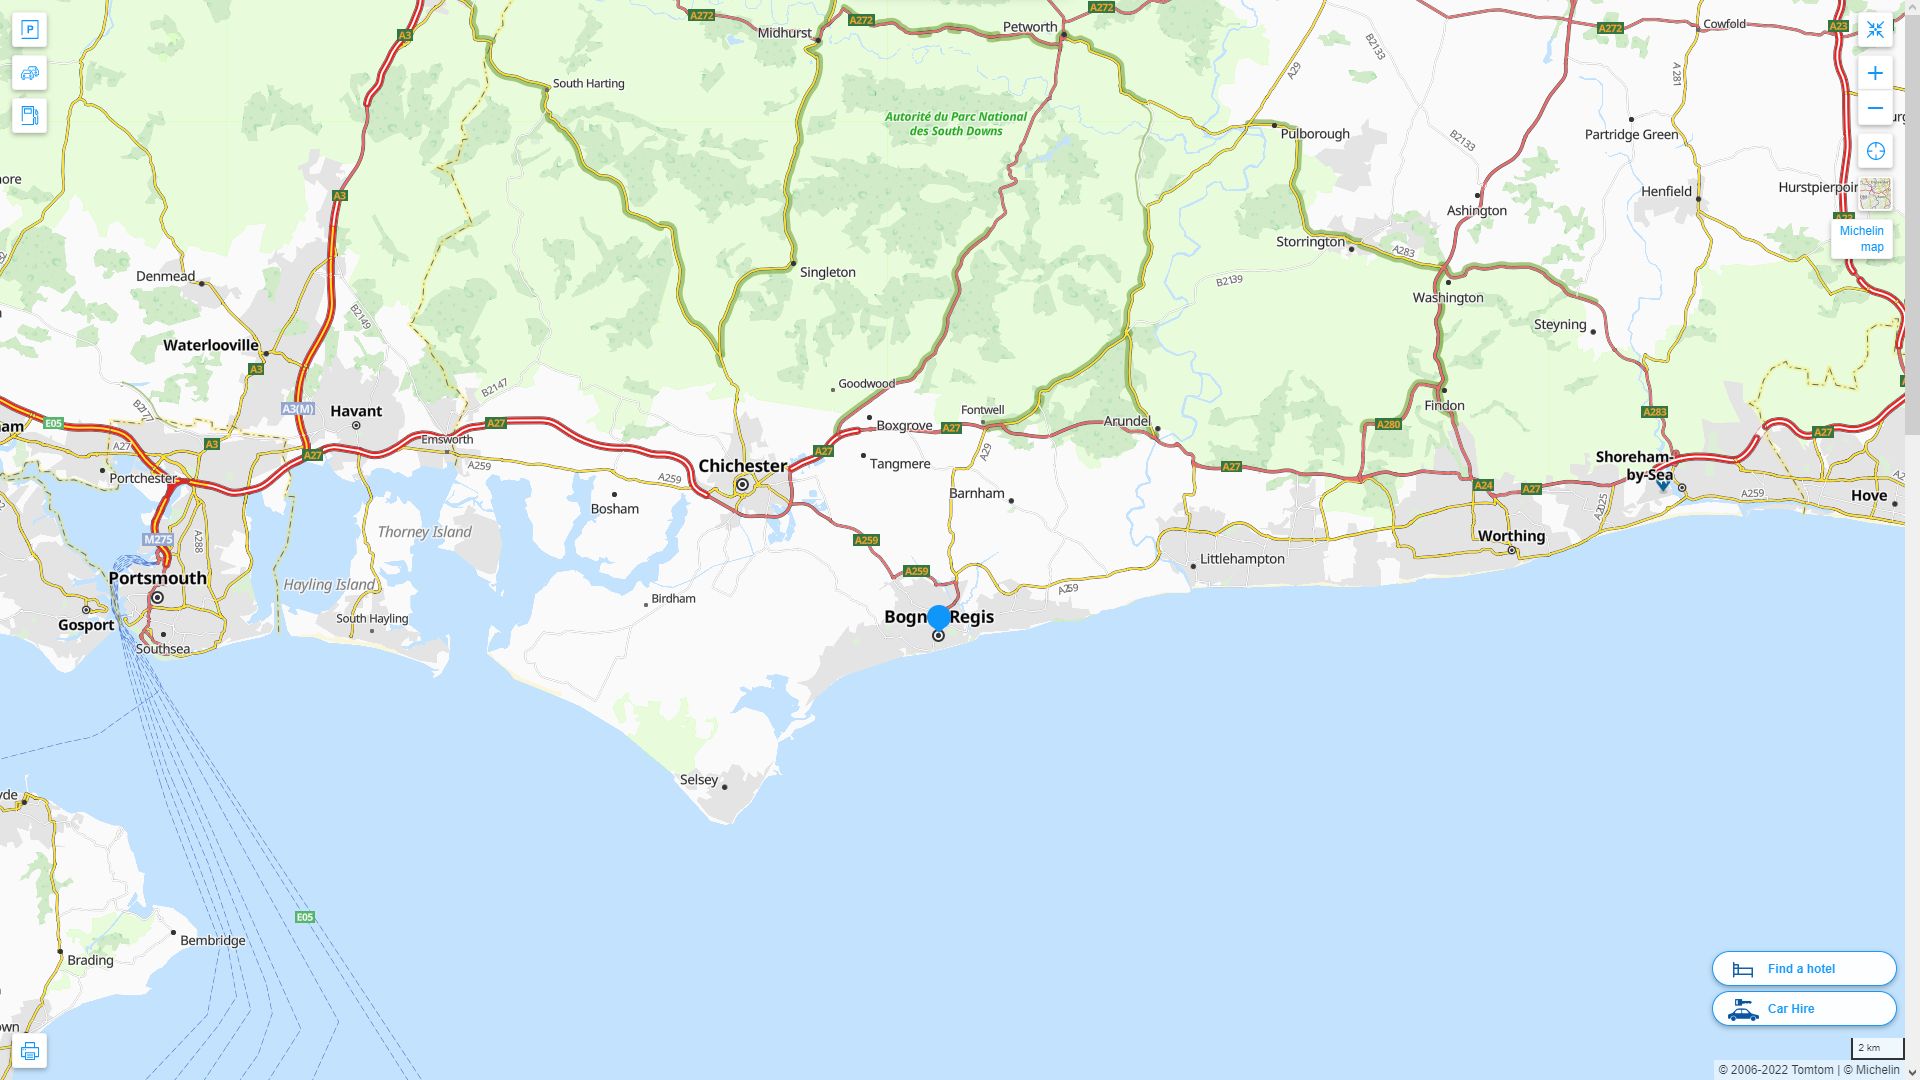 Bognor Regis Highway and Road Map